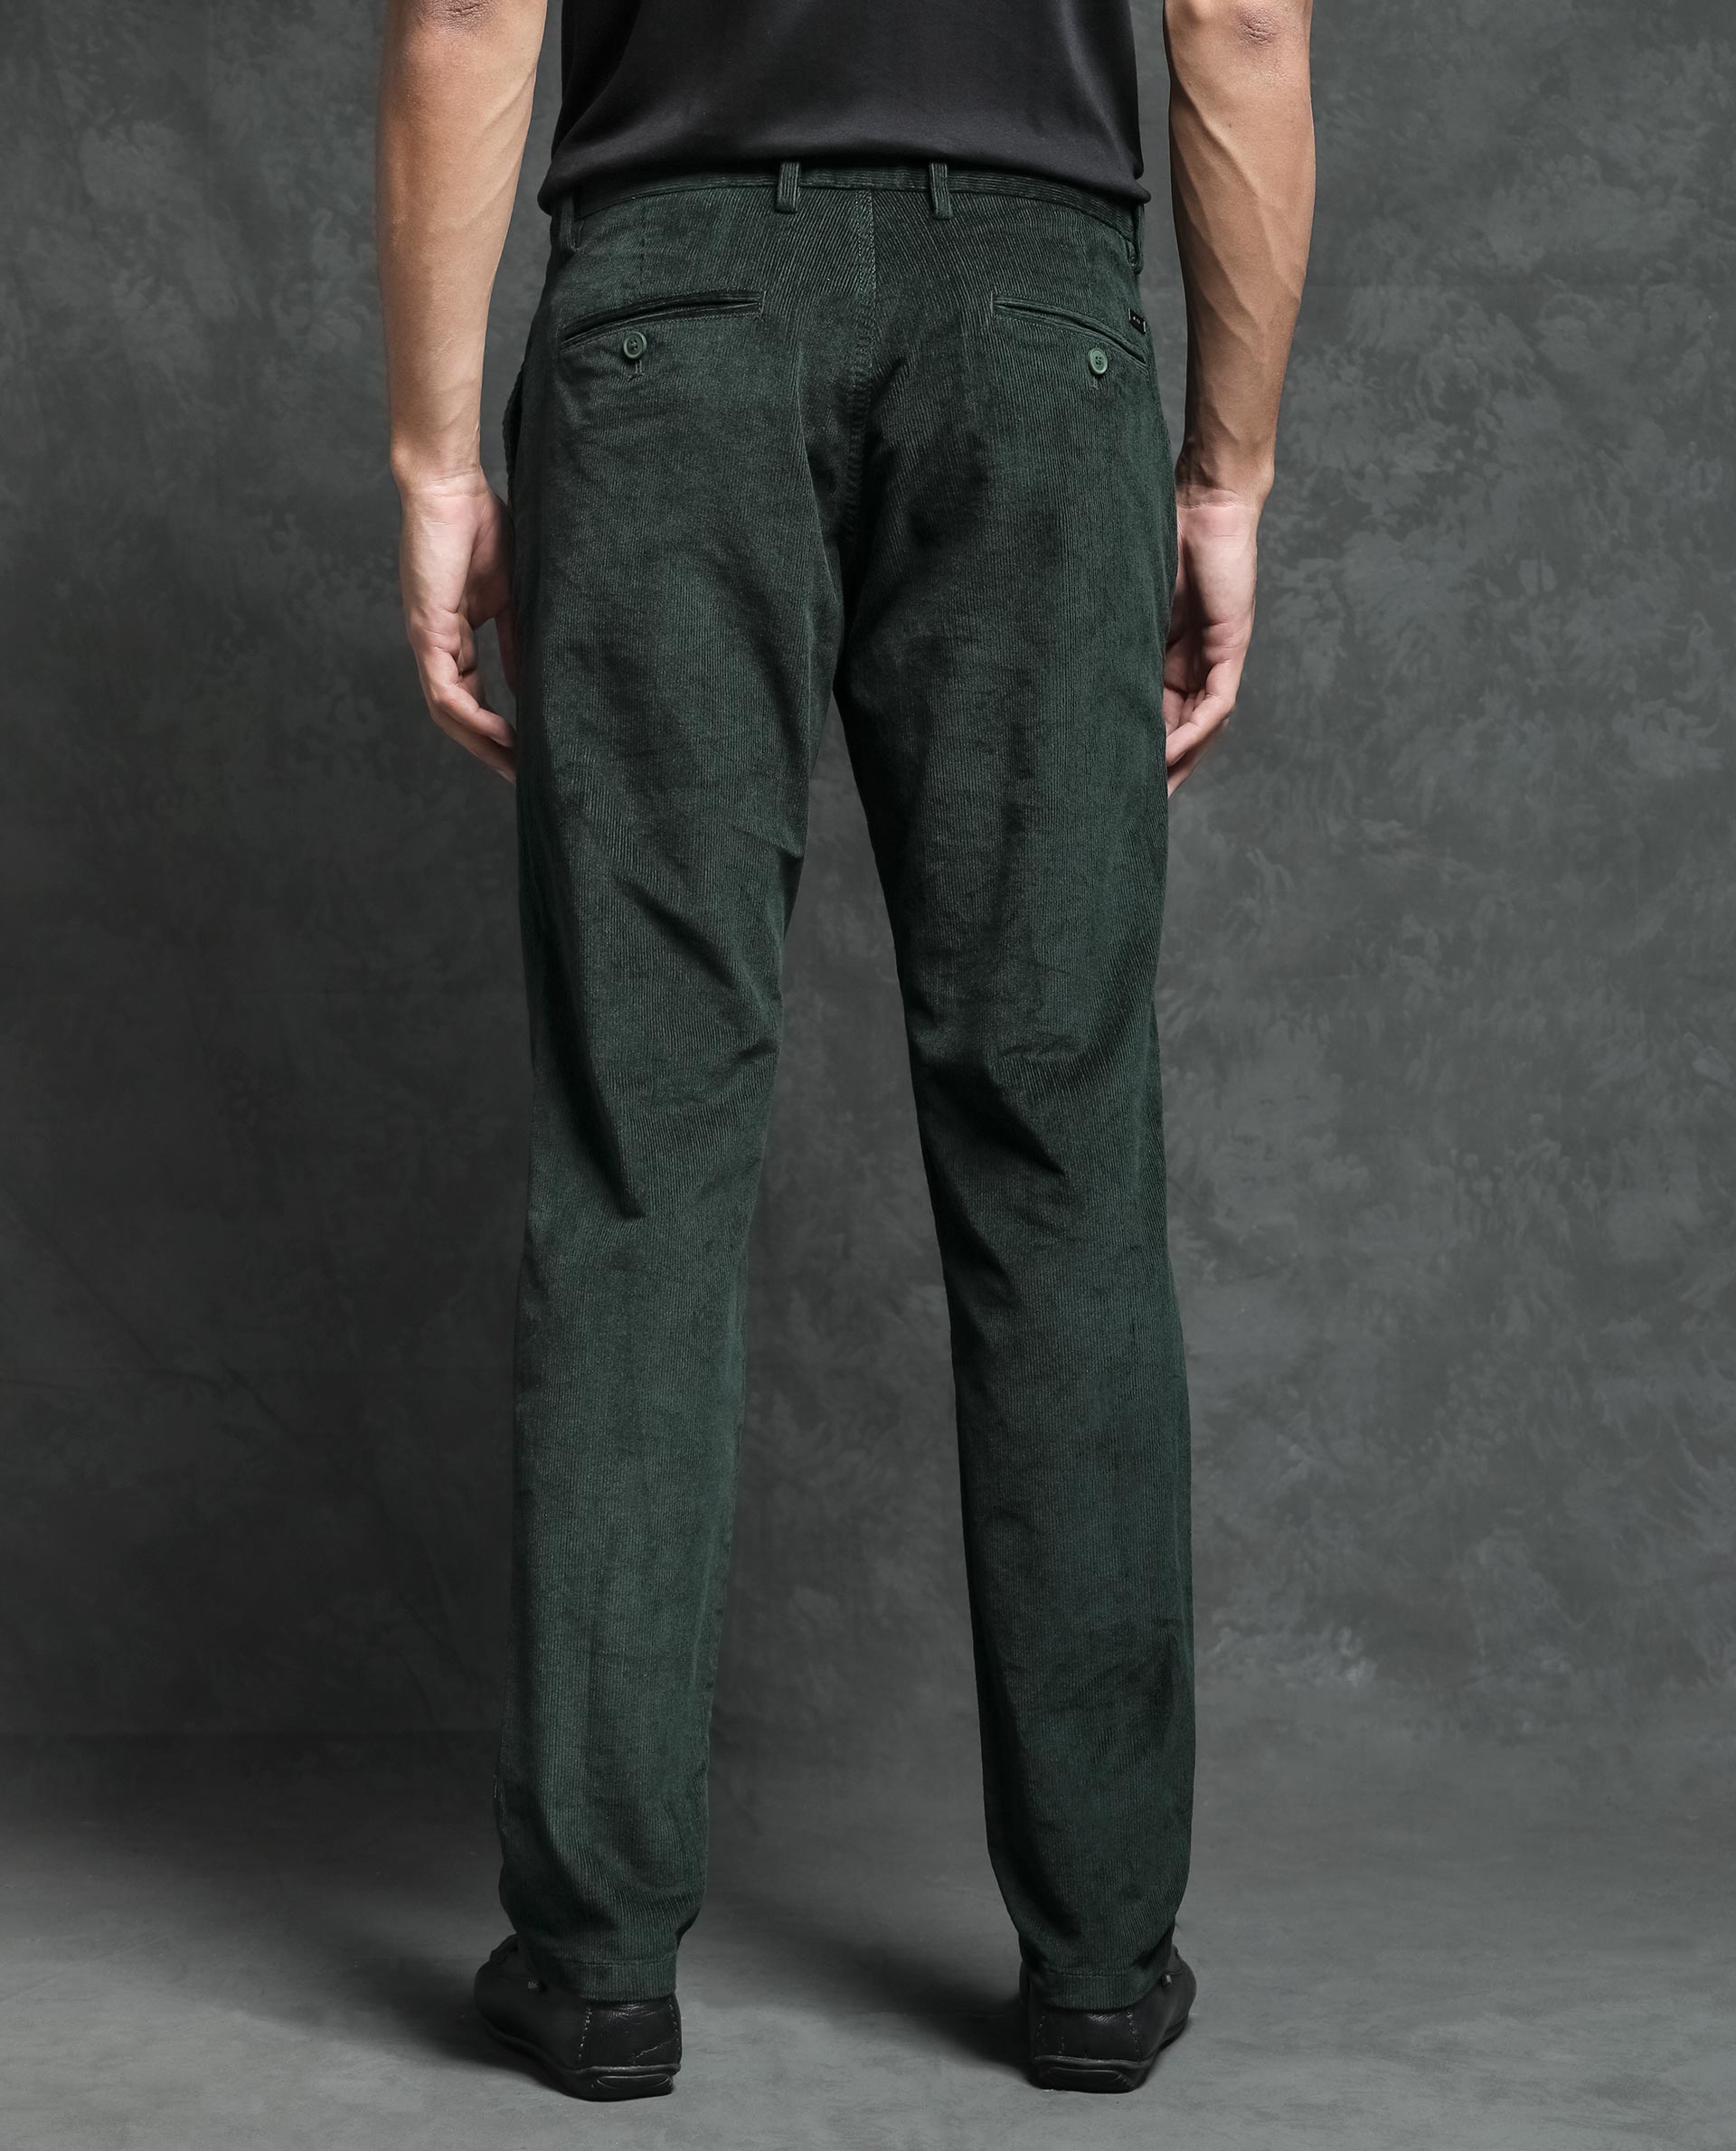 Green corduroy pants